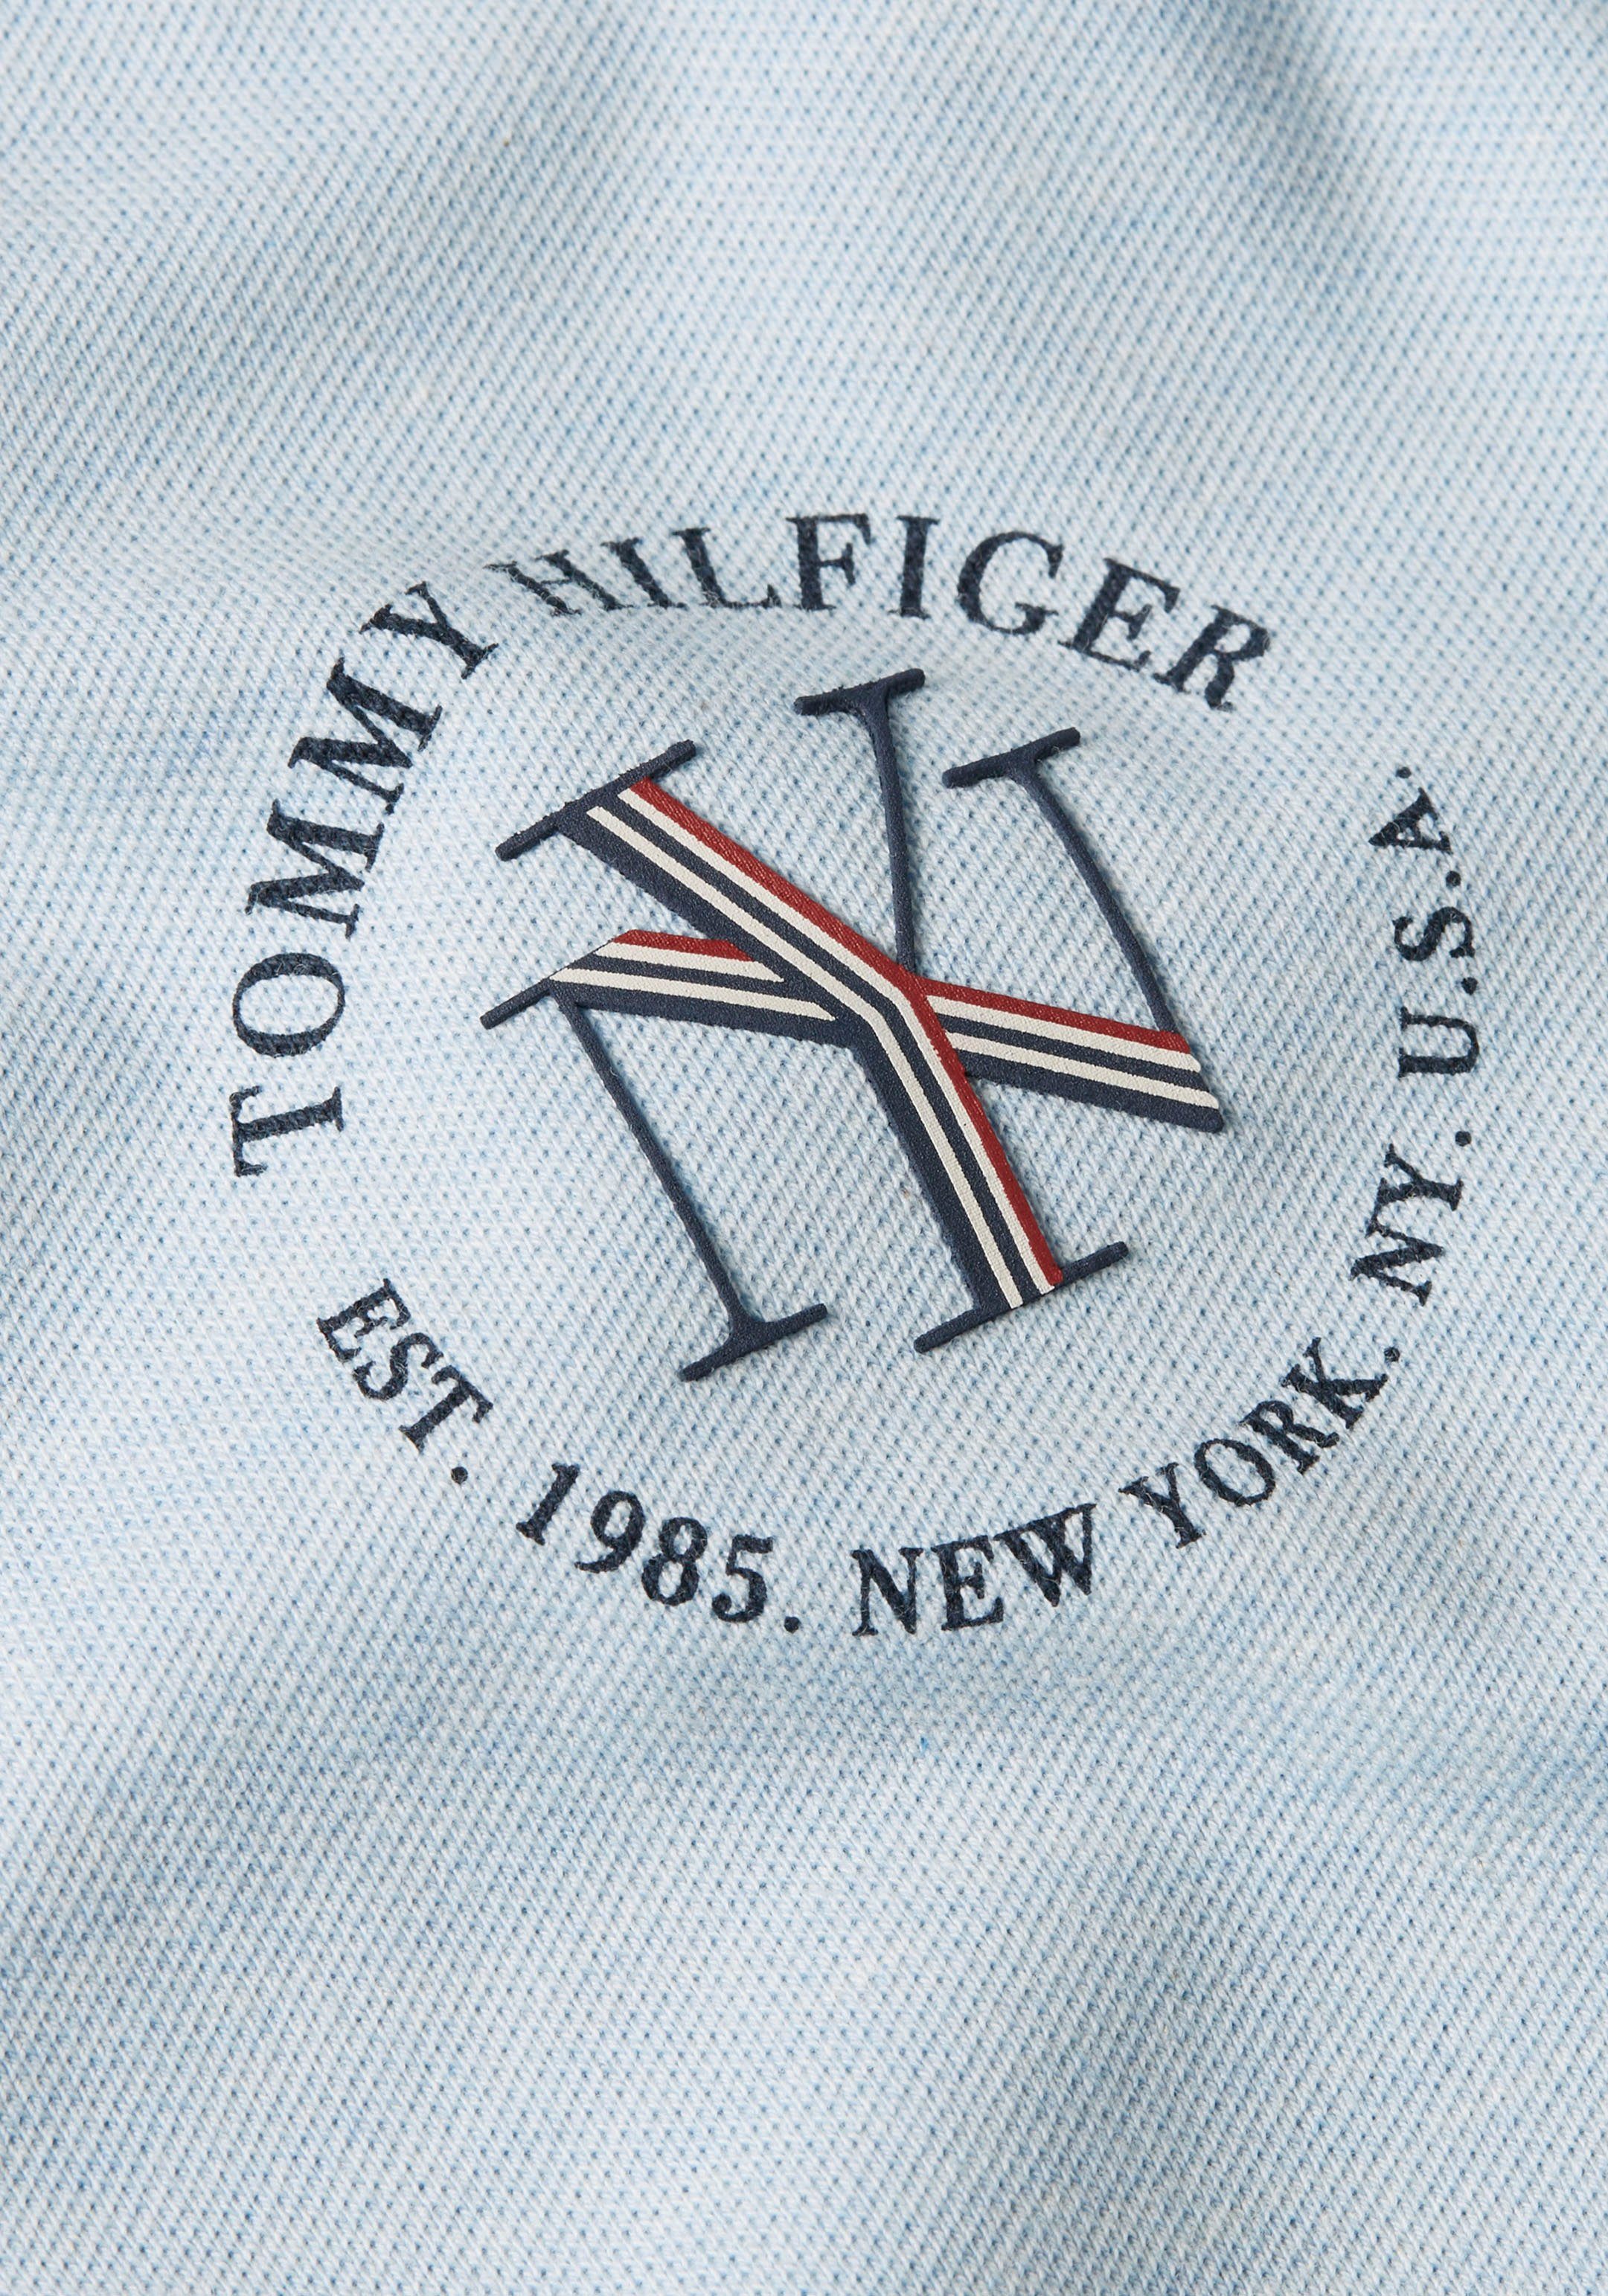 Tommy Hilfiger POLO Hilfiger NYC Markenlabel mit SS Breezy-Blue-Heather REG ROUNDALL Tommy Poloshirt